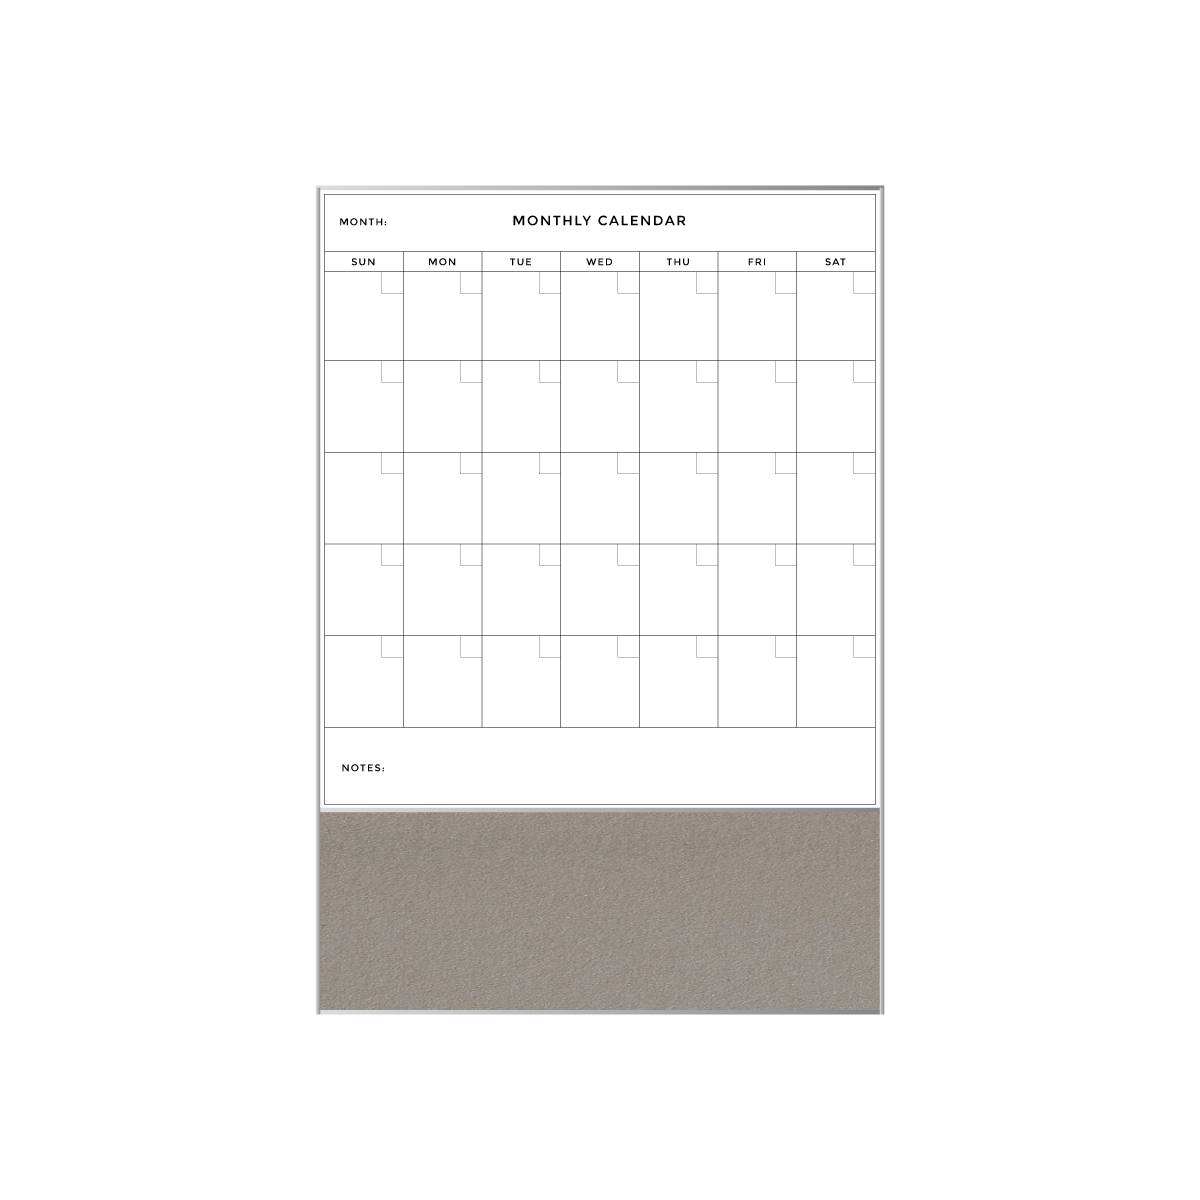 Combination Monthly Calendar | Potato Skin FORBO | Satin Aluminum Minimalist Frame Portrait